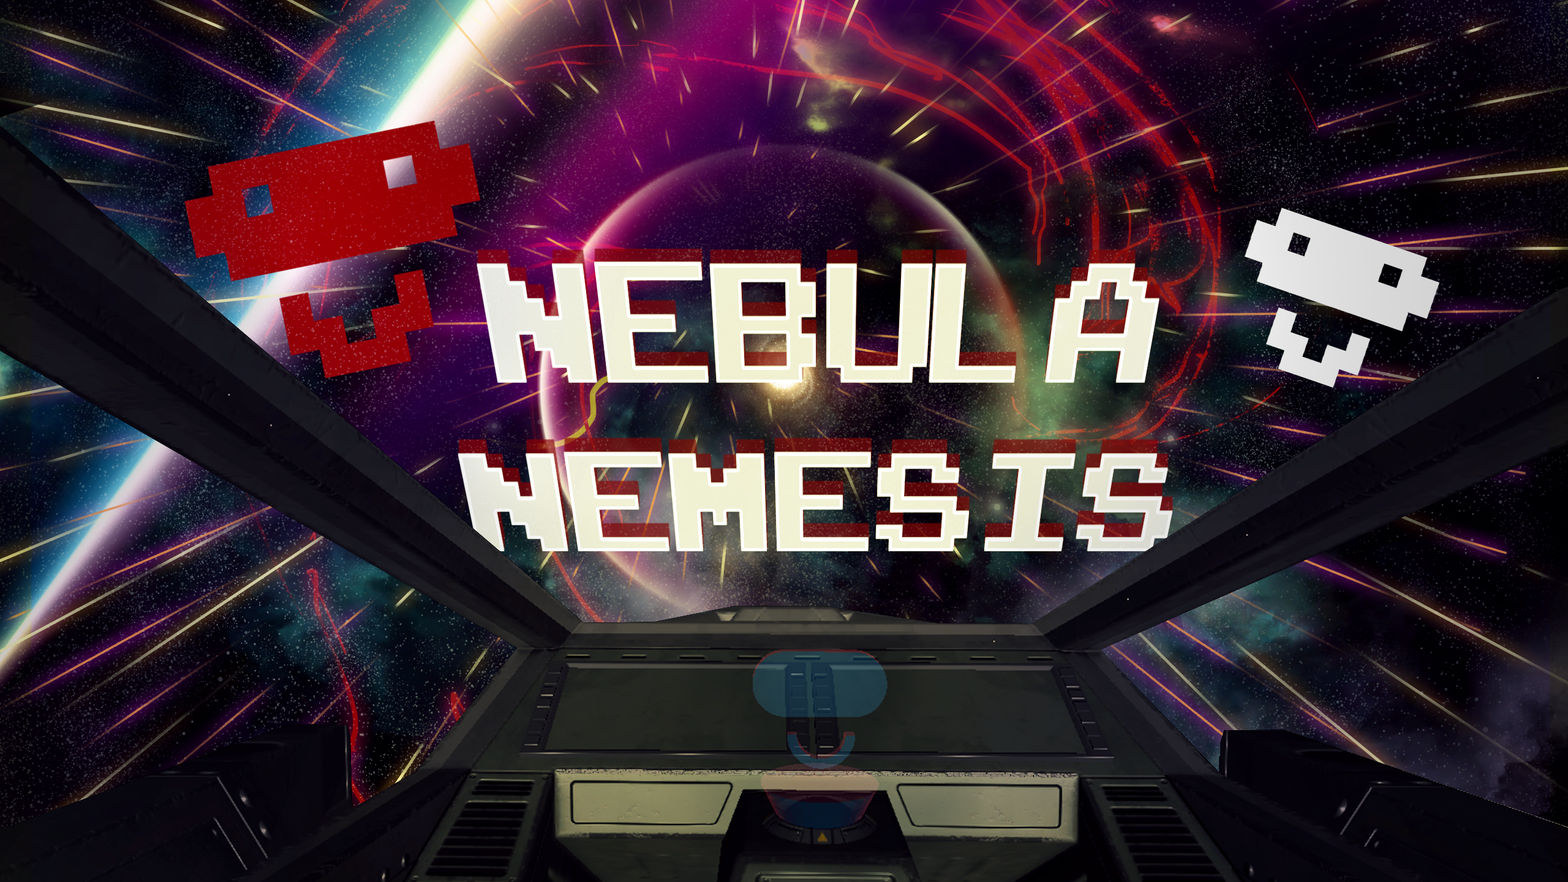 Nebula Nemesis